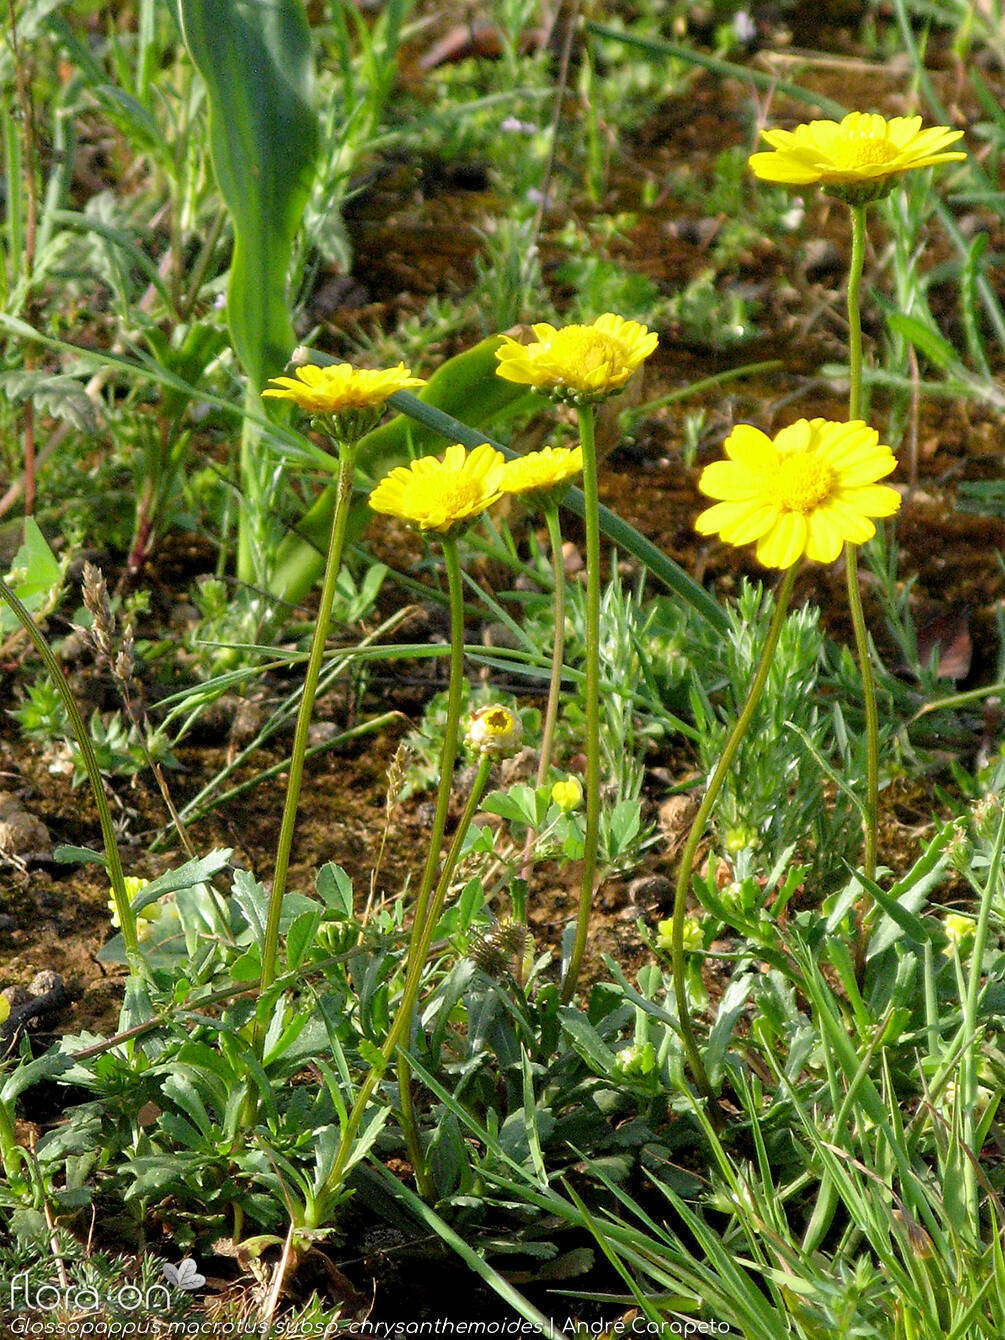 Glossopappus macrotus chrysanthemoides - Hábito | André Carapeto; CC BY-NC 4.0